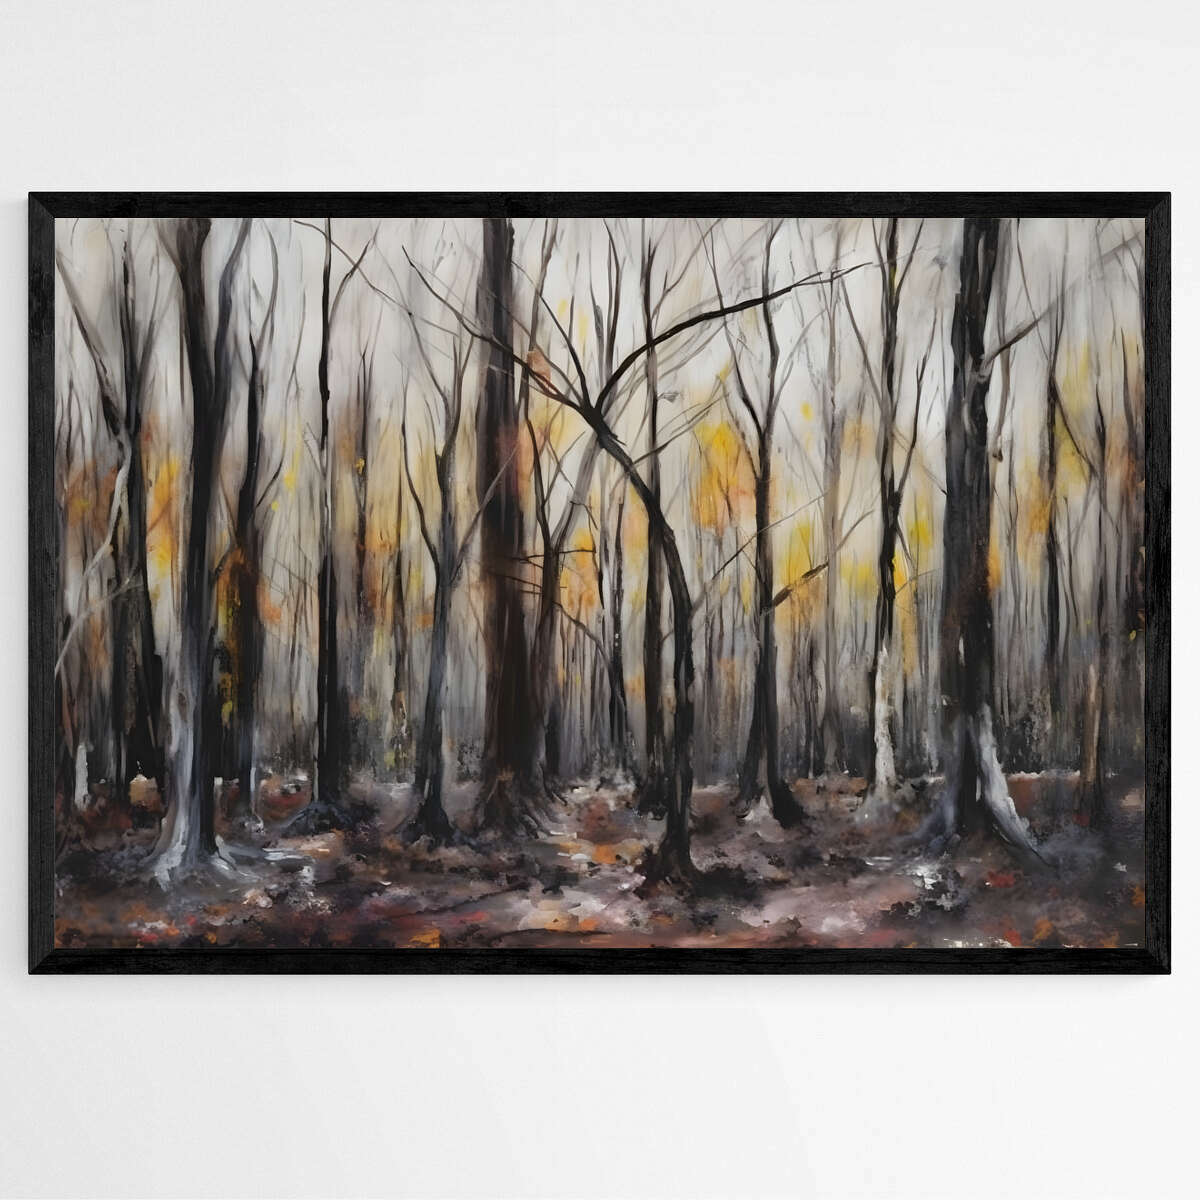 Autumn Blaze | Nature Wall Art Prints - The Canvas Hive